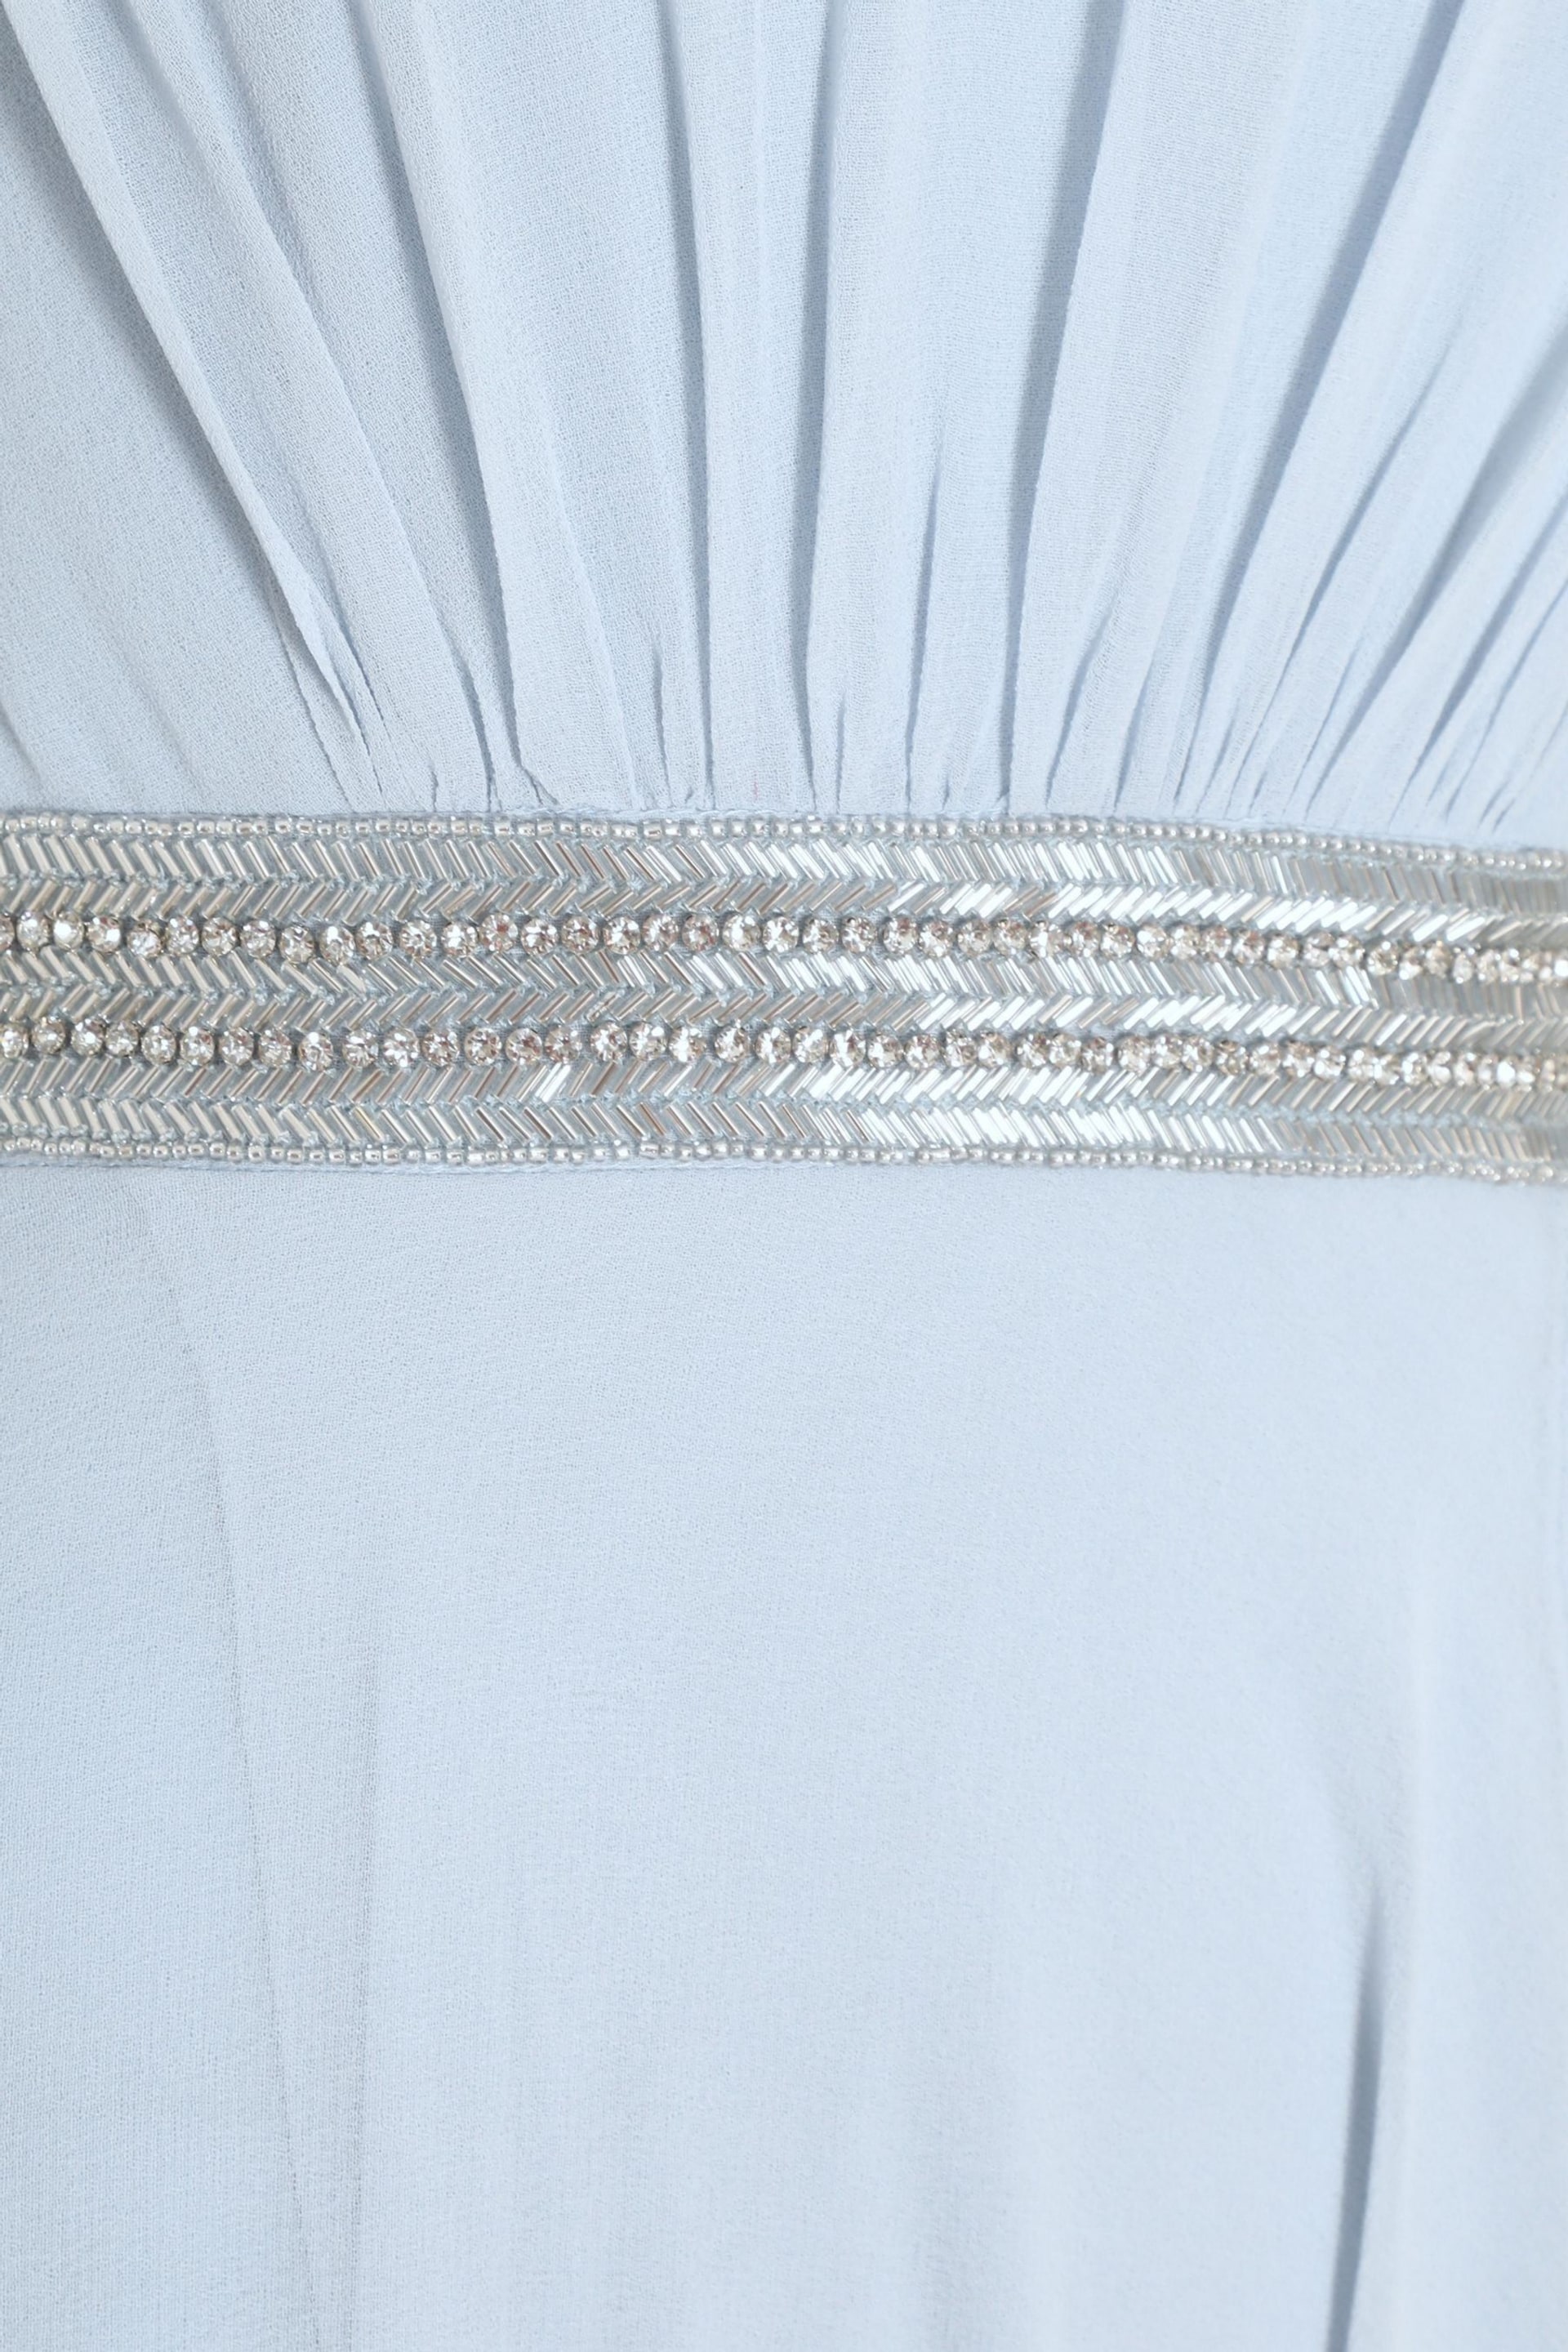 Quiz Light Blue Chiffon Maxi Bridesmaid Dress with Sequin Belt - Image 8 of 8